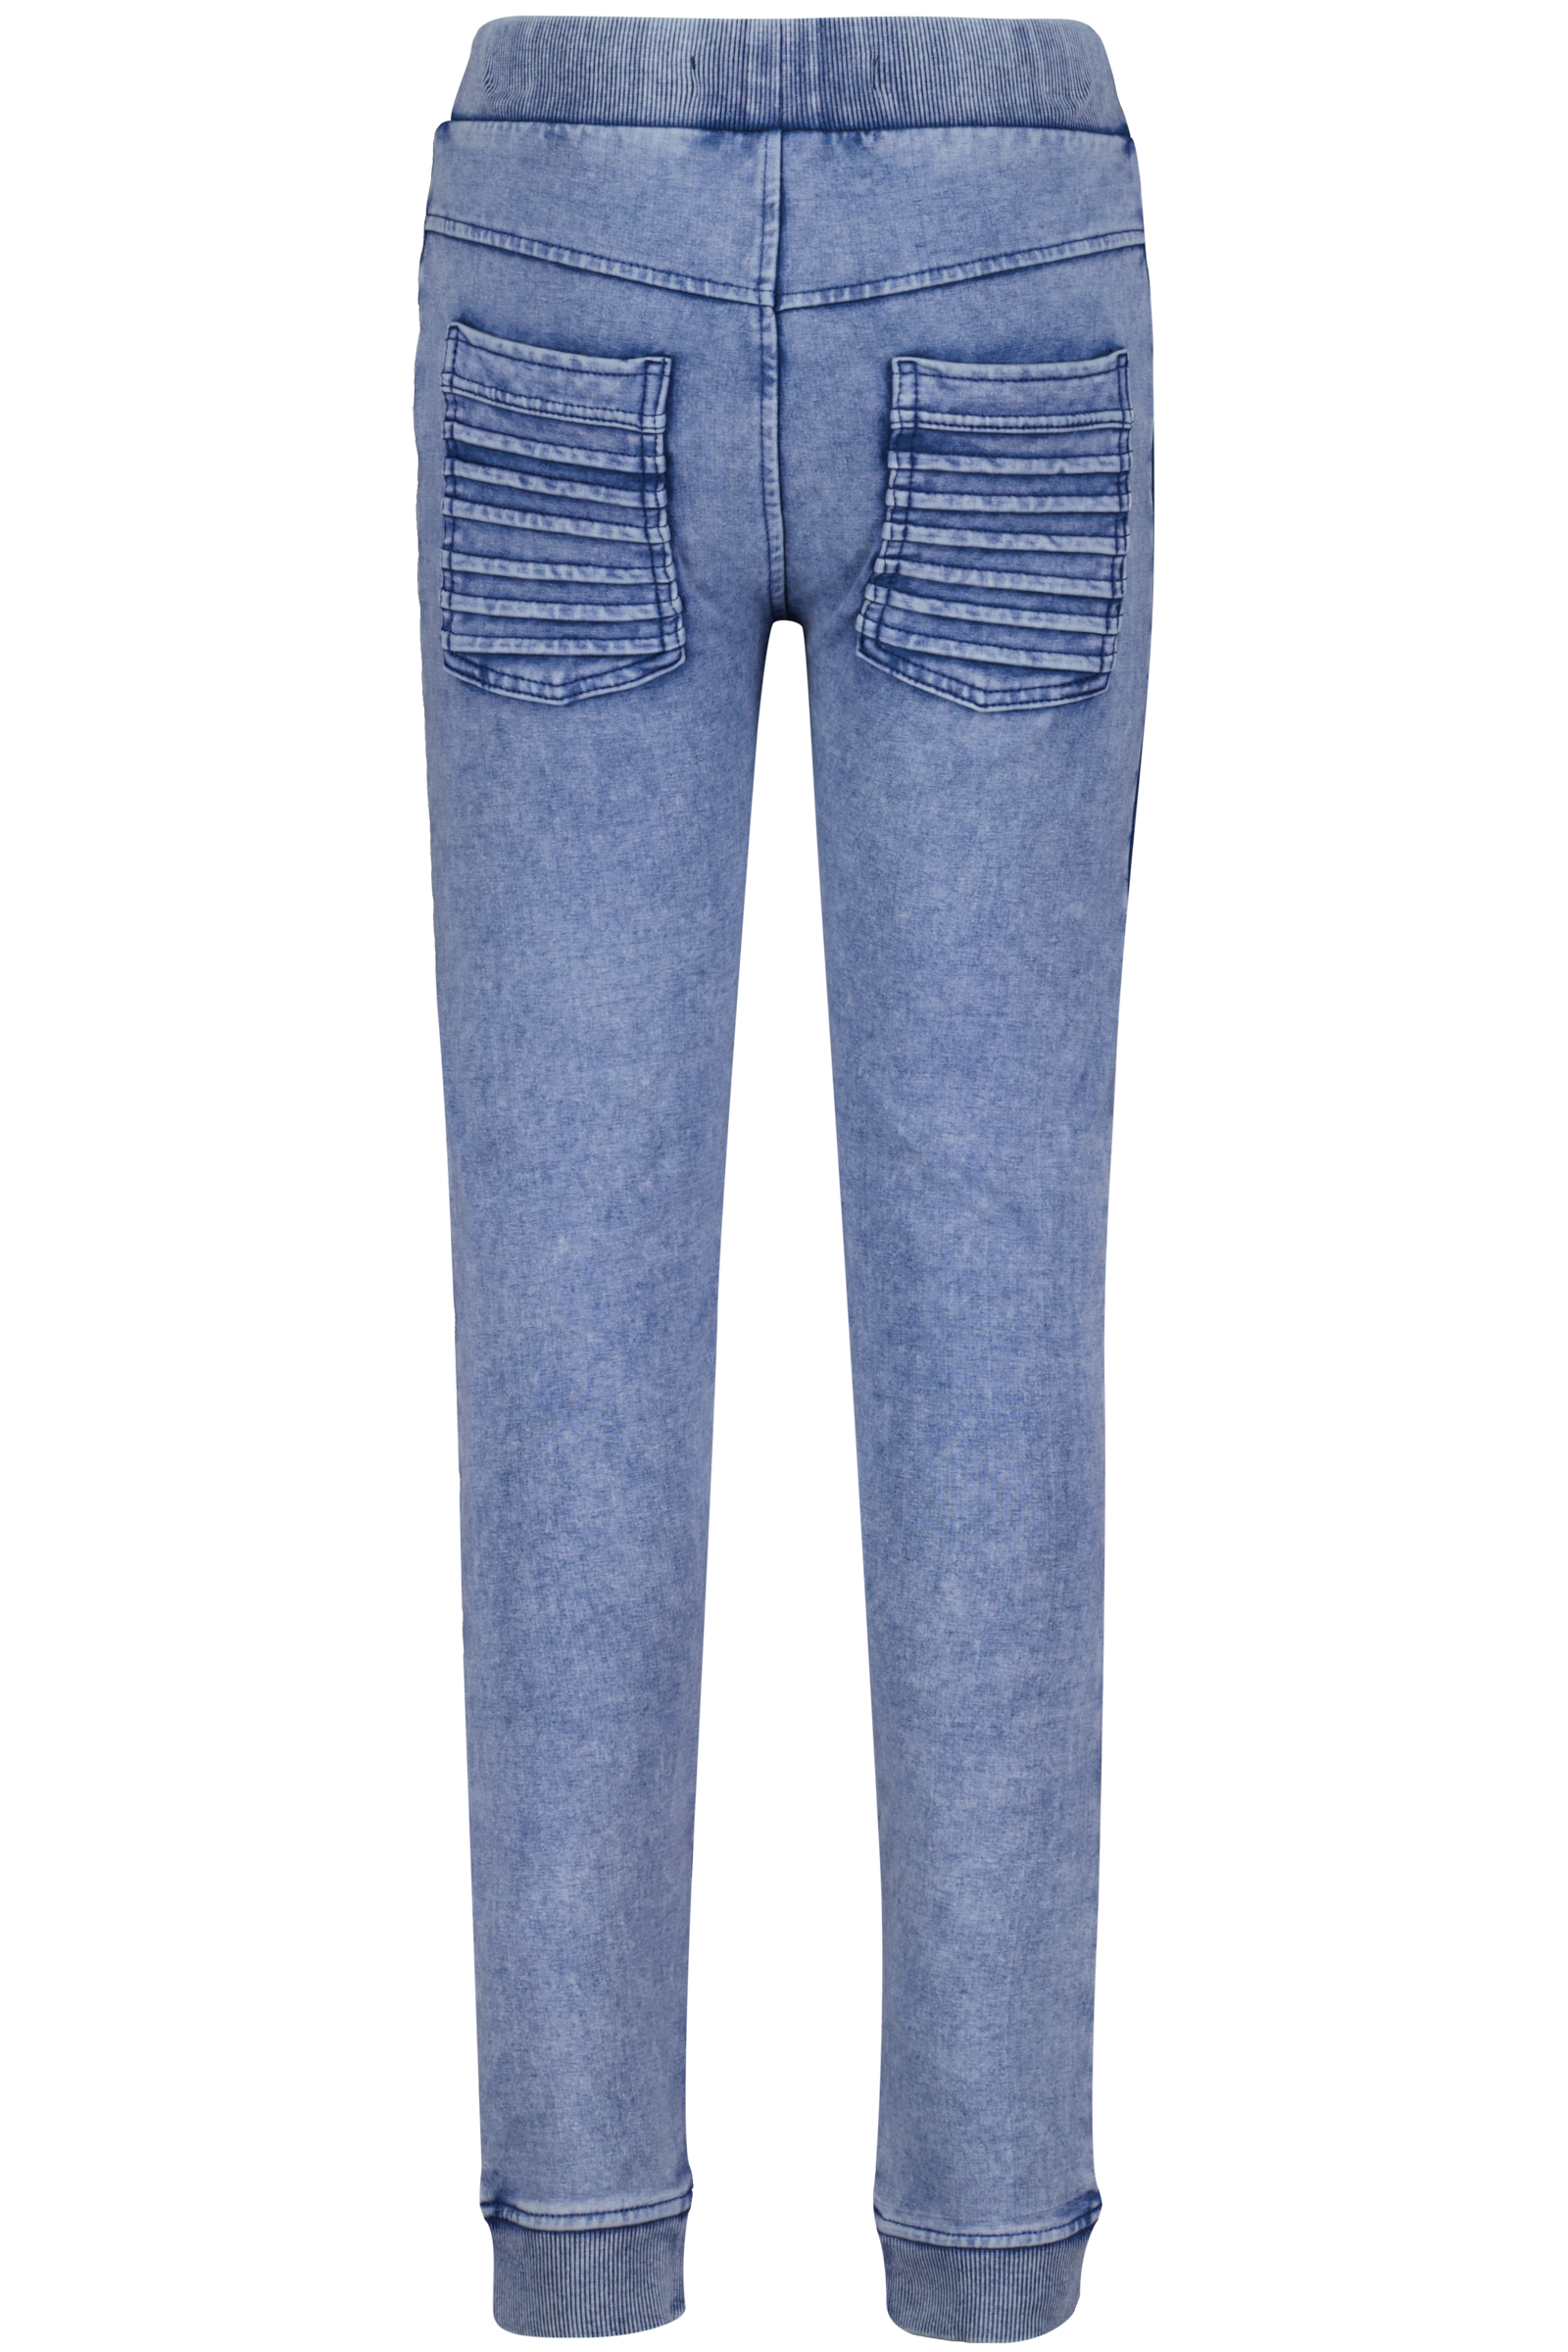 4PRESIDENT Quido  jeans